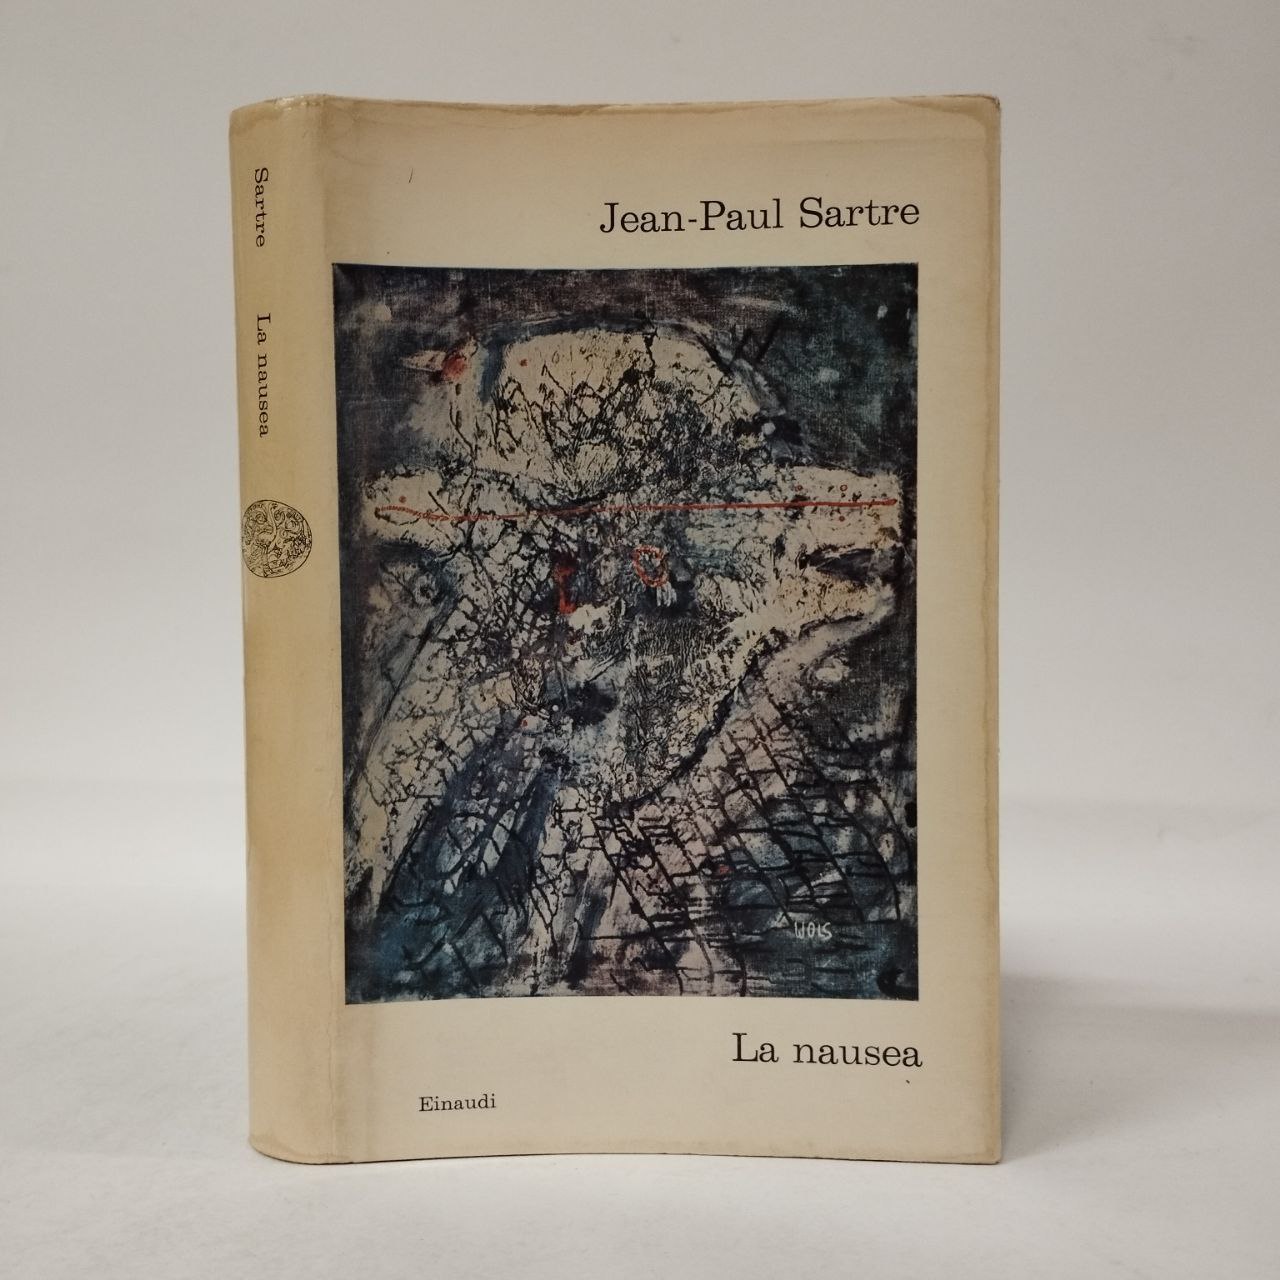 La nausea. Sartre Jean-Paul. Einaudi, 1962. - Equilibri Libreria Torino